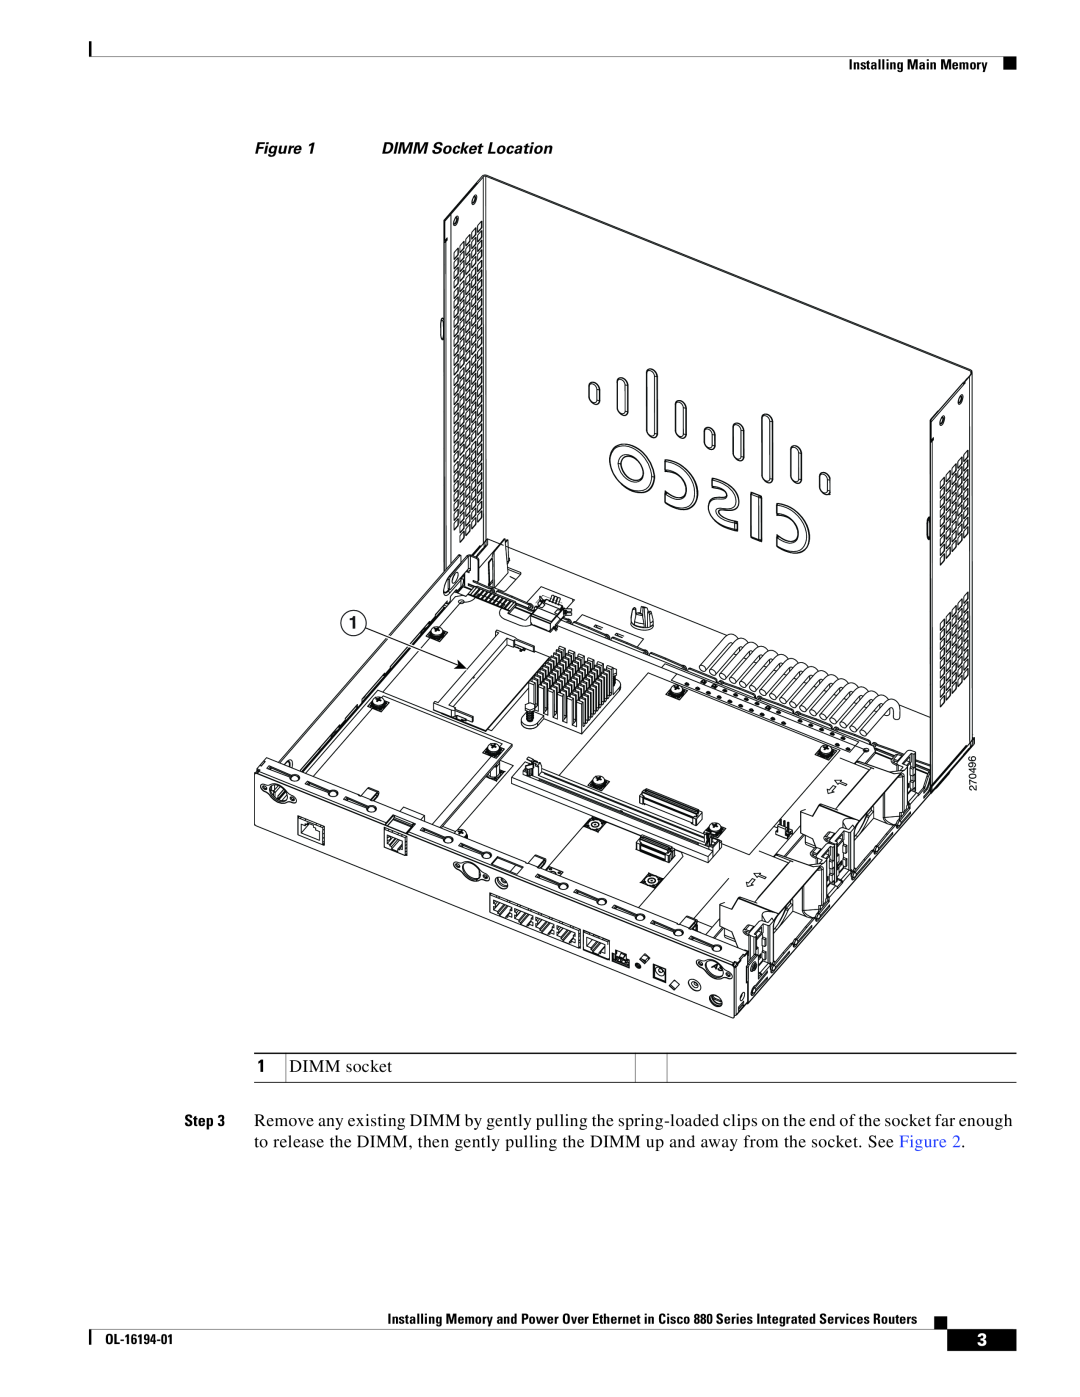 Cisco Systems 880 Series manual DIMM socket, DIMM Socket Location, Installing Main Memory, OL-16194-01 